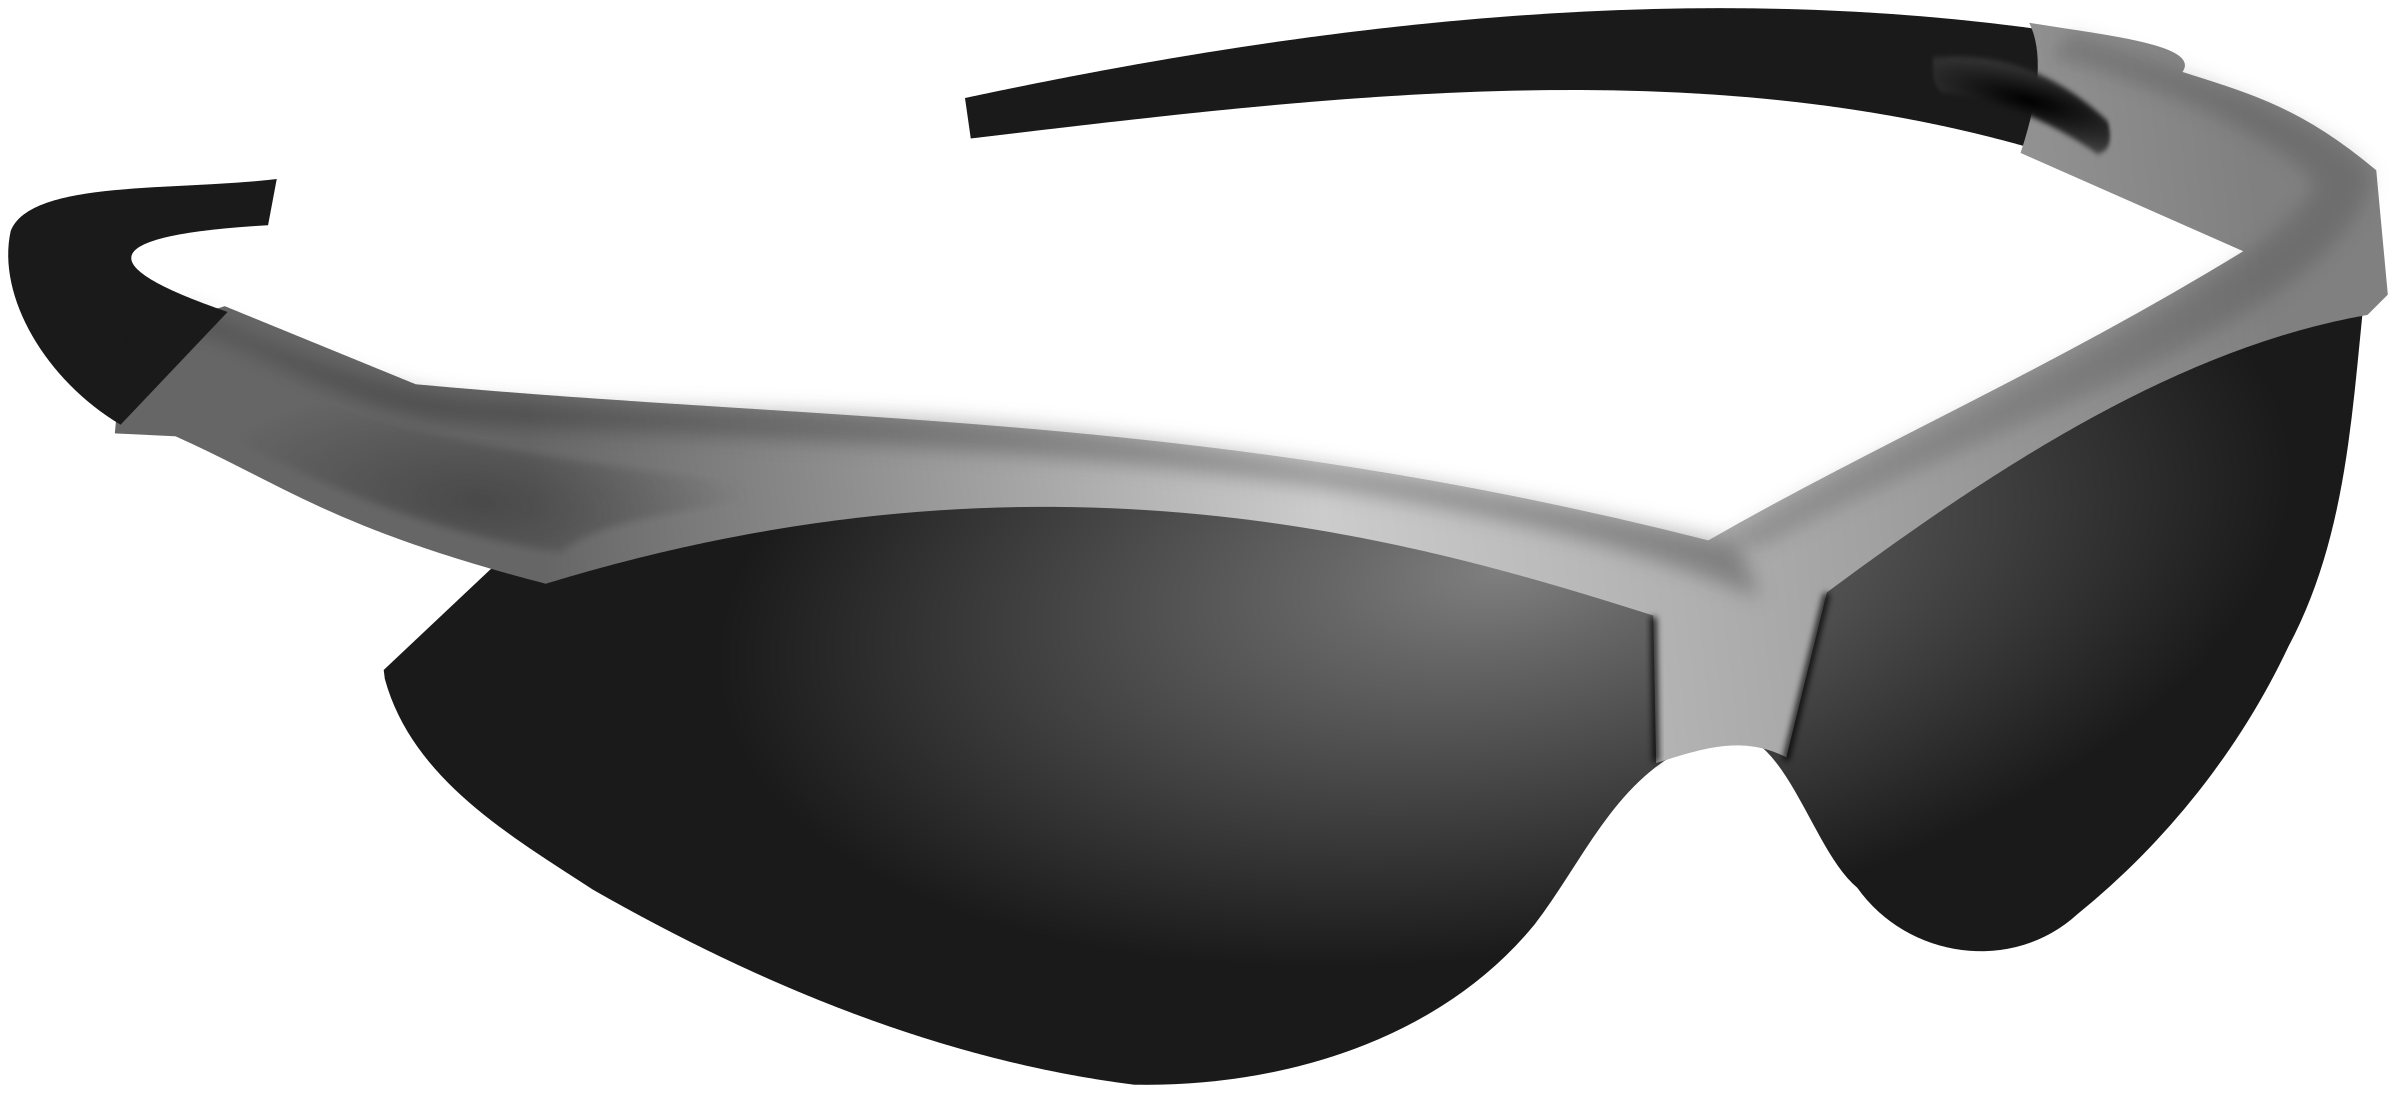 clipart sunglasses sun glass